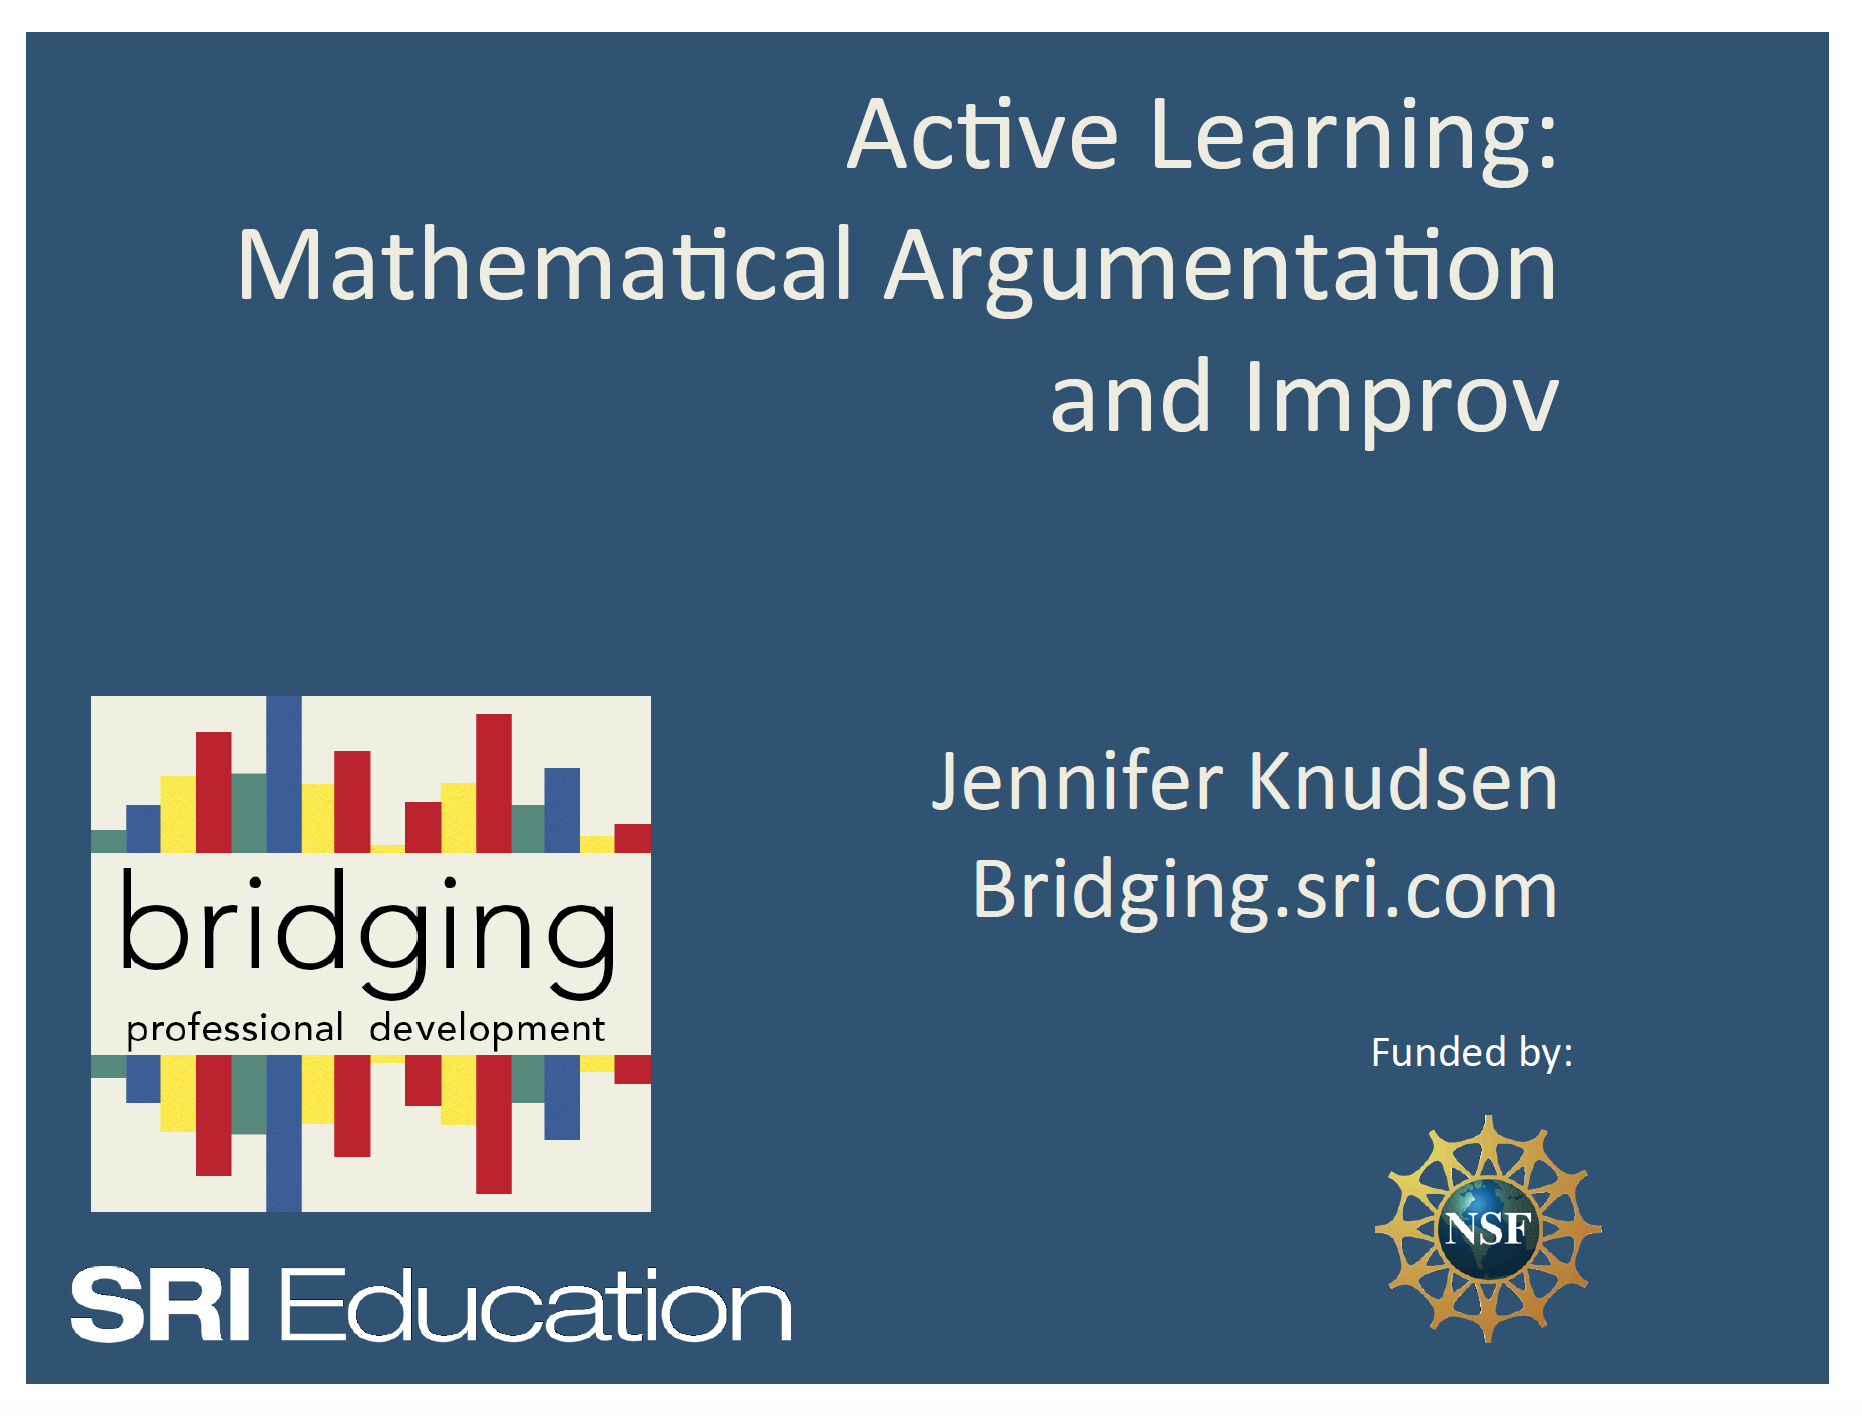 Active Learning: Mathematical Argumentation and Improv Symposium